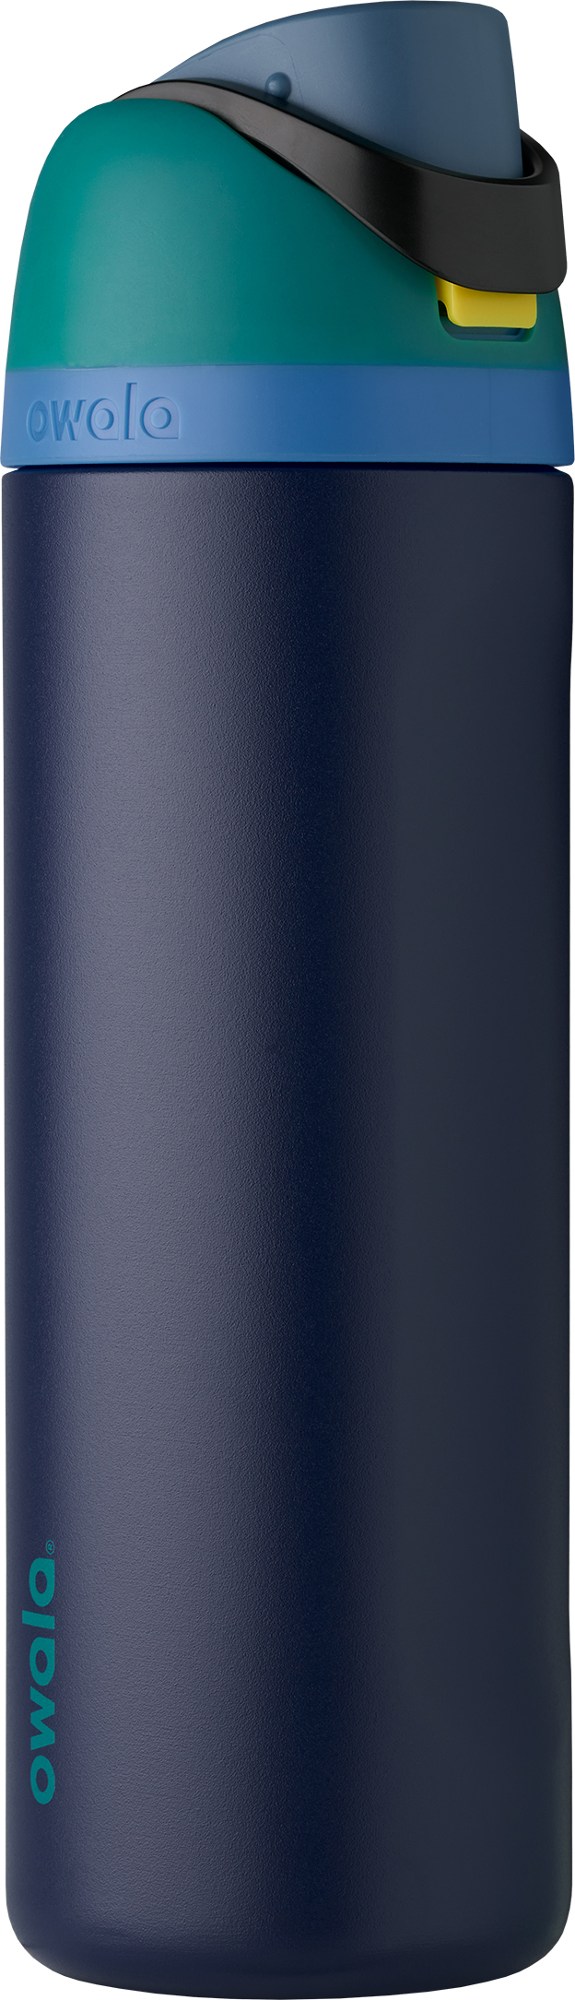 Вакуумная бутылка для воды FreeSip - 24 эт. унция Owala, синий